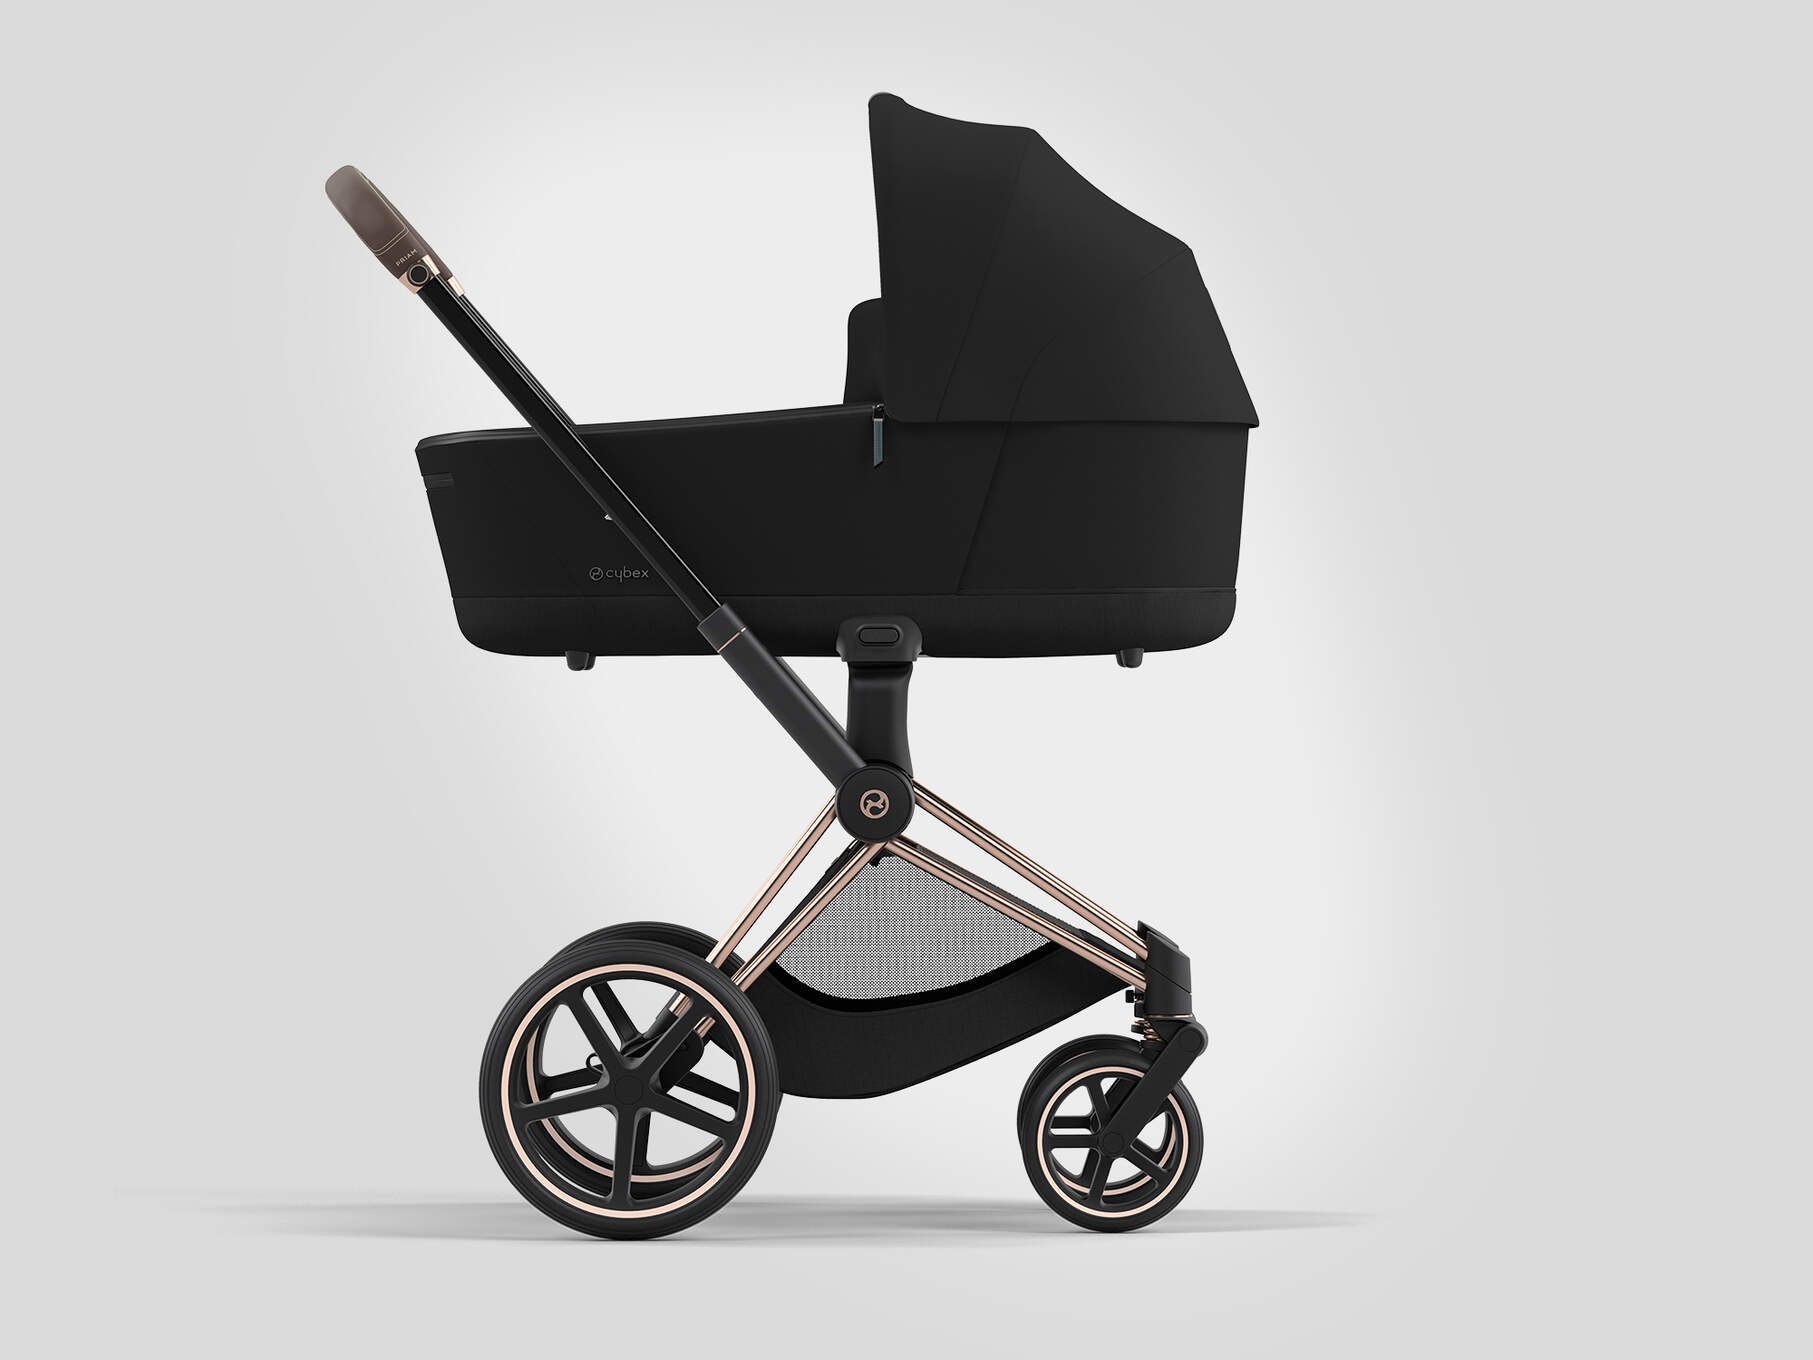 CYBEX Platinum–barnvagn med Priam Lux Carry Cot bärsäng visad på Priam chassi